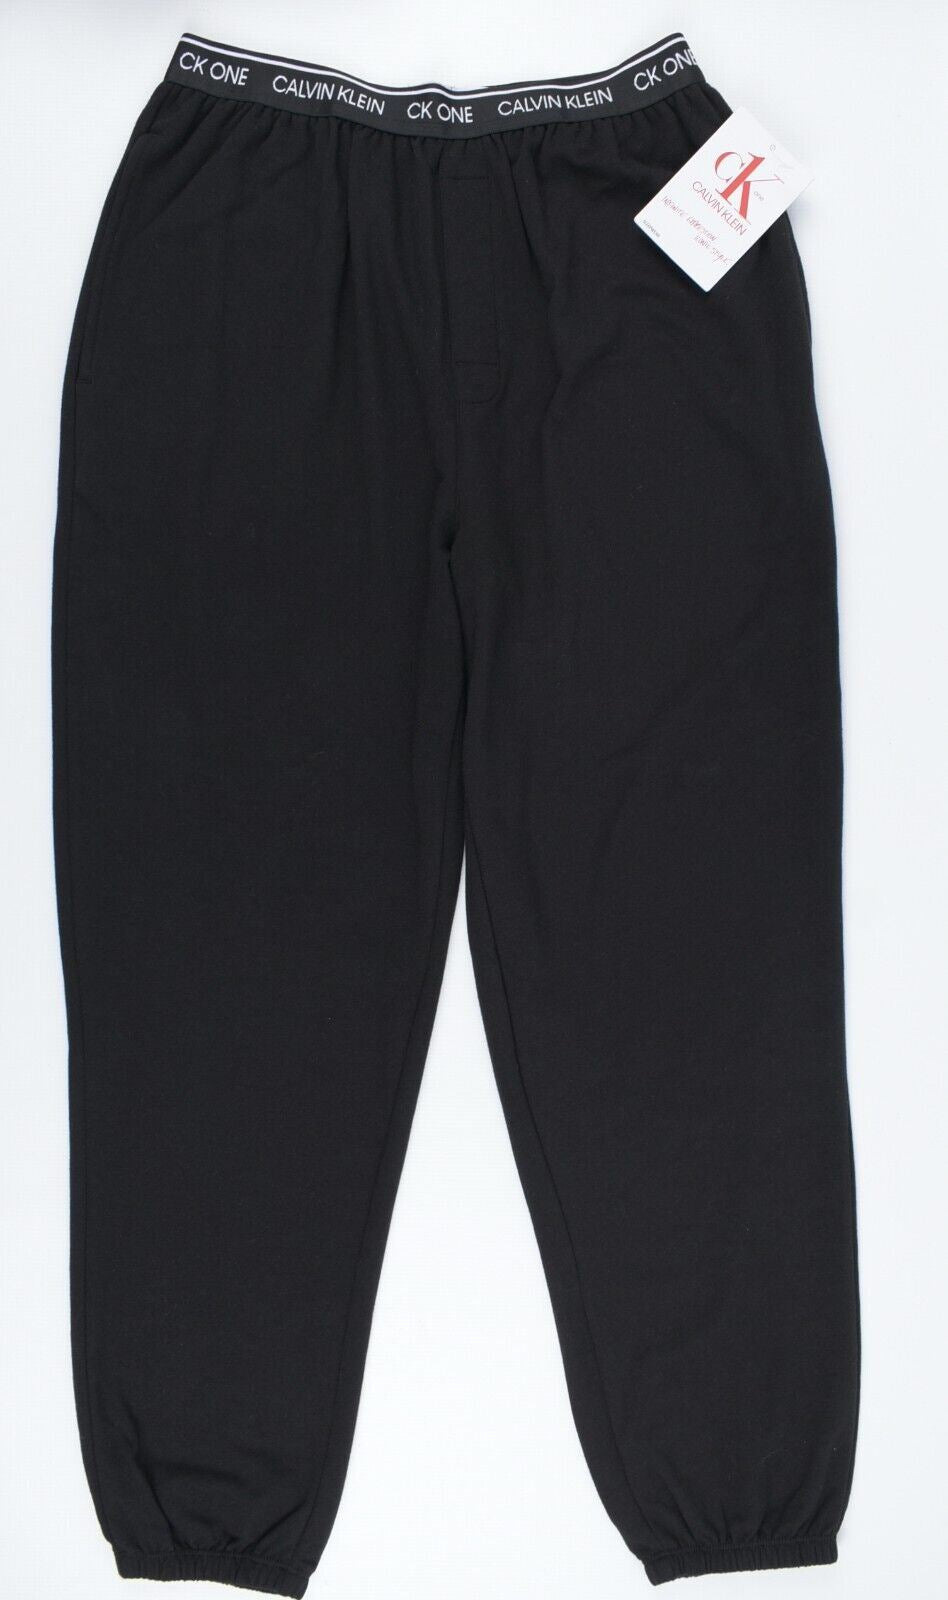 CALVIN KLEIN CK ONE Men's Cuffed Jersey Lounge Pants, Joggers, Black, size XL